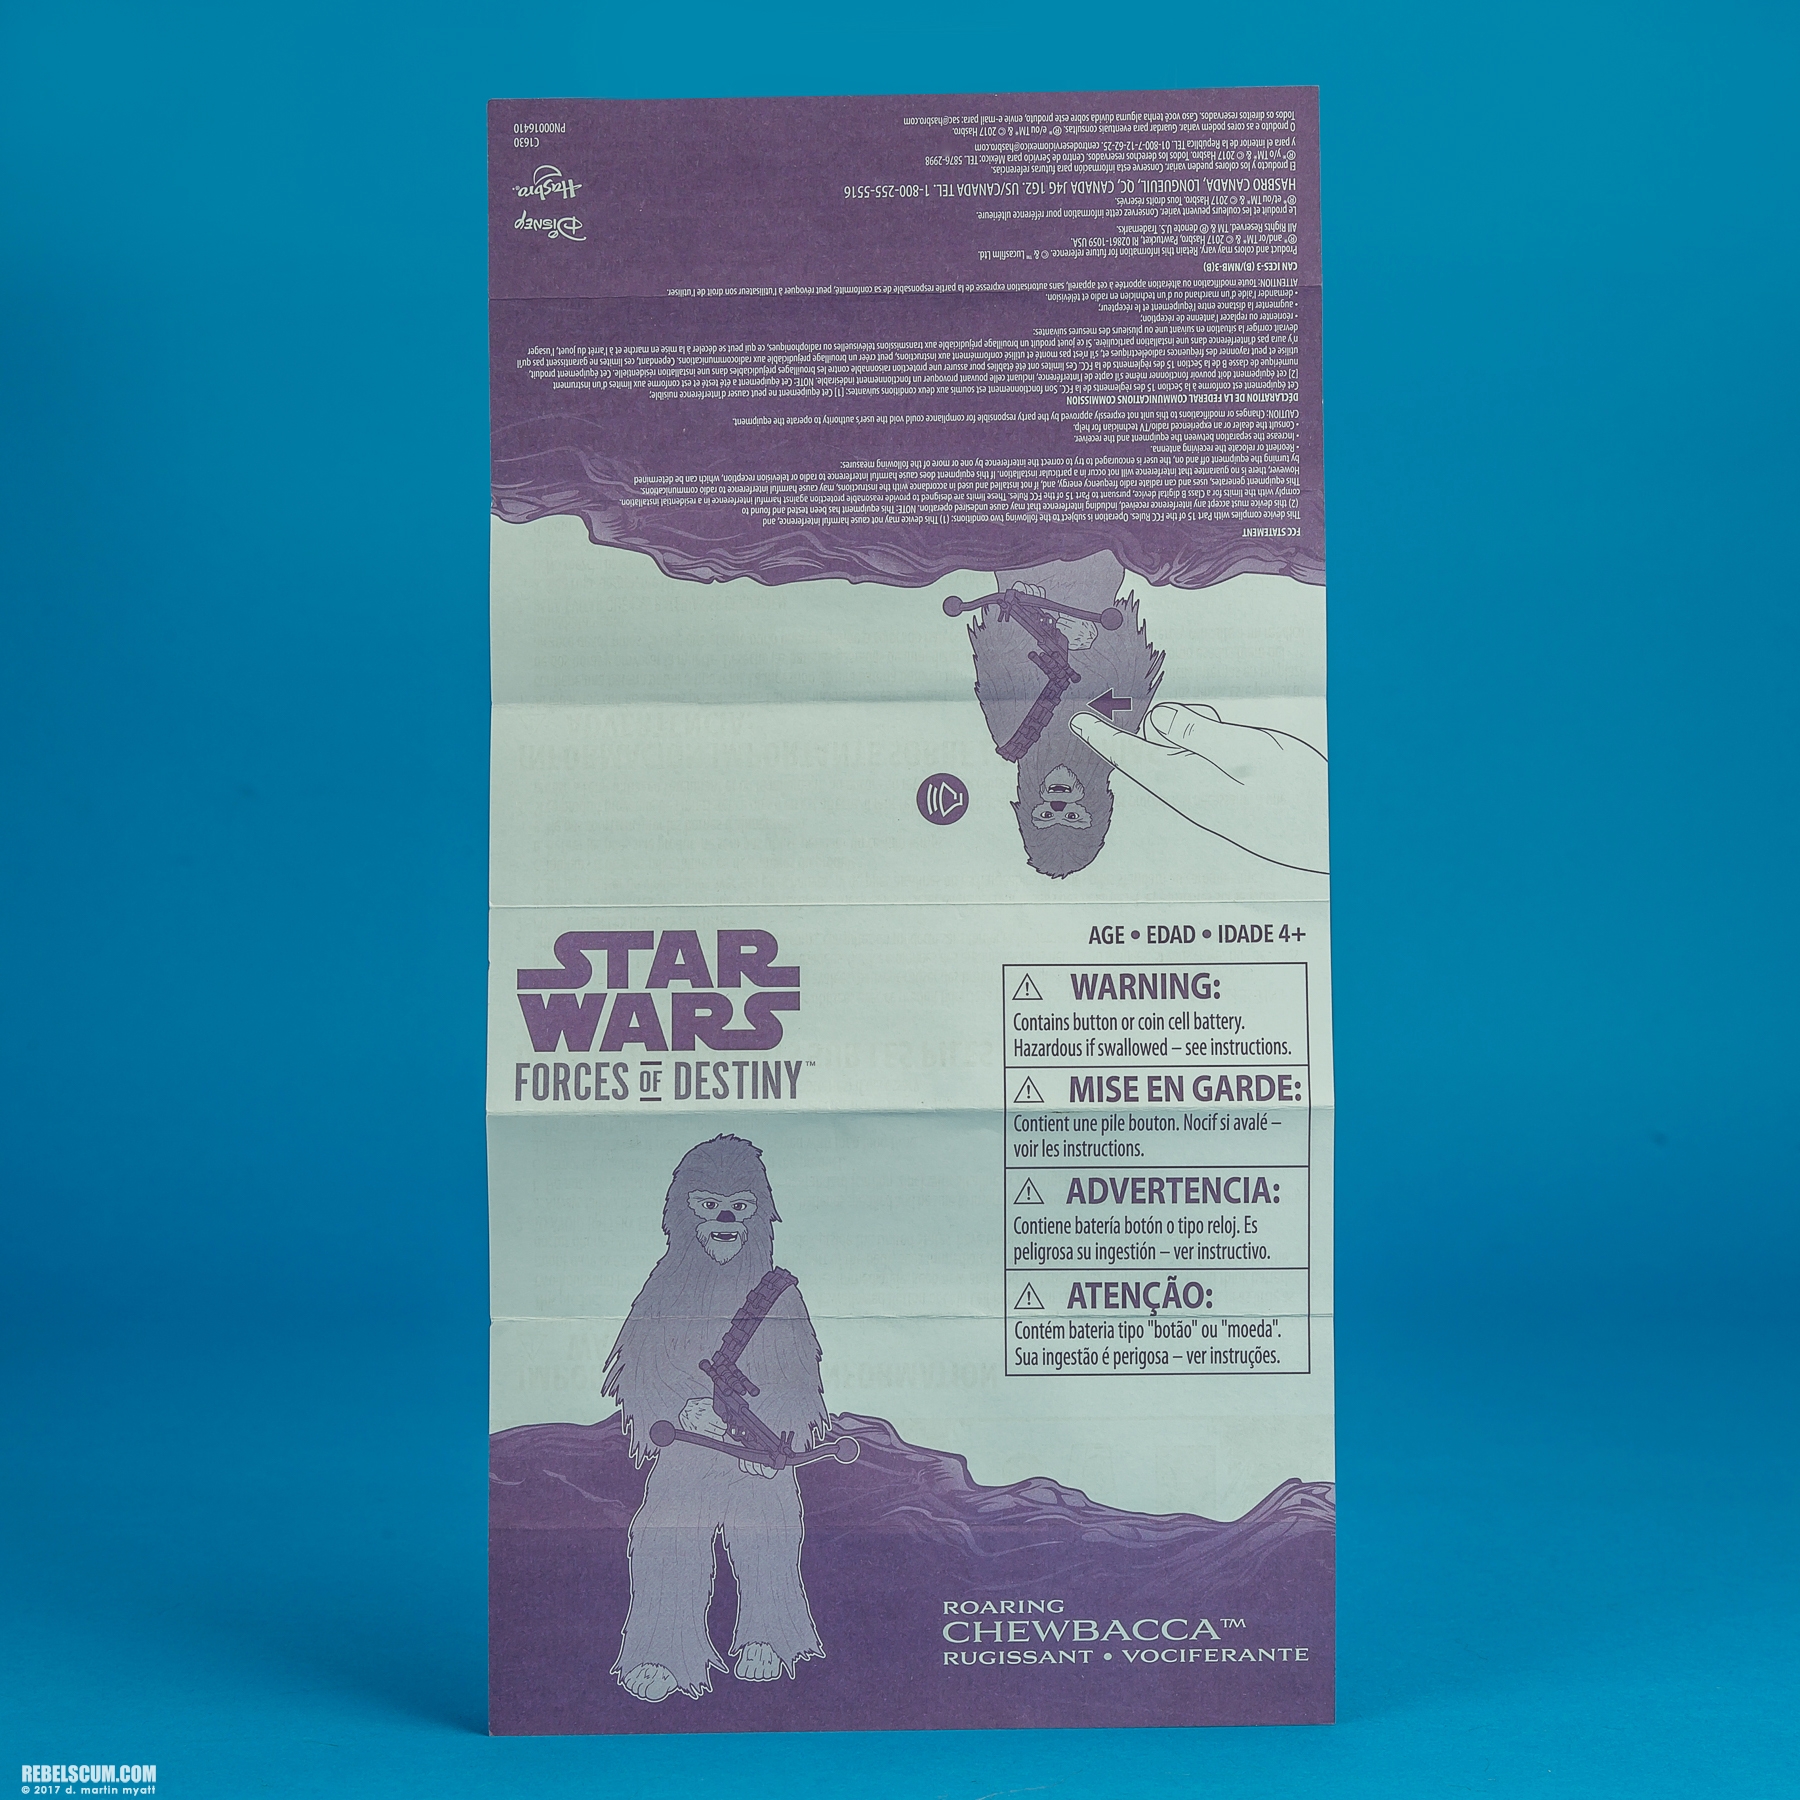 Chewbacca-Roaring-Star-Wars-Forces-of-Destiny-Hasbro-010.jpg